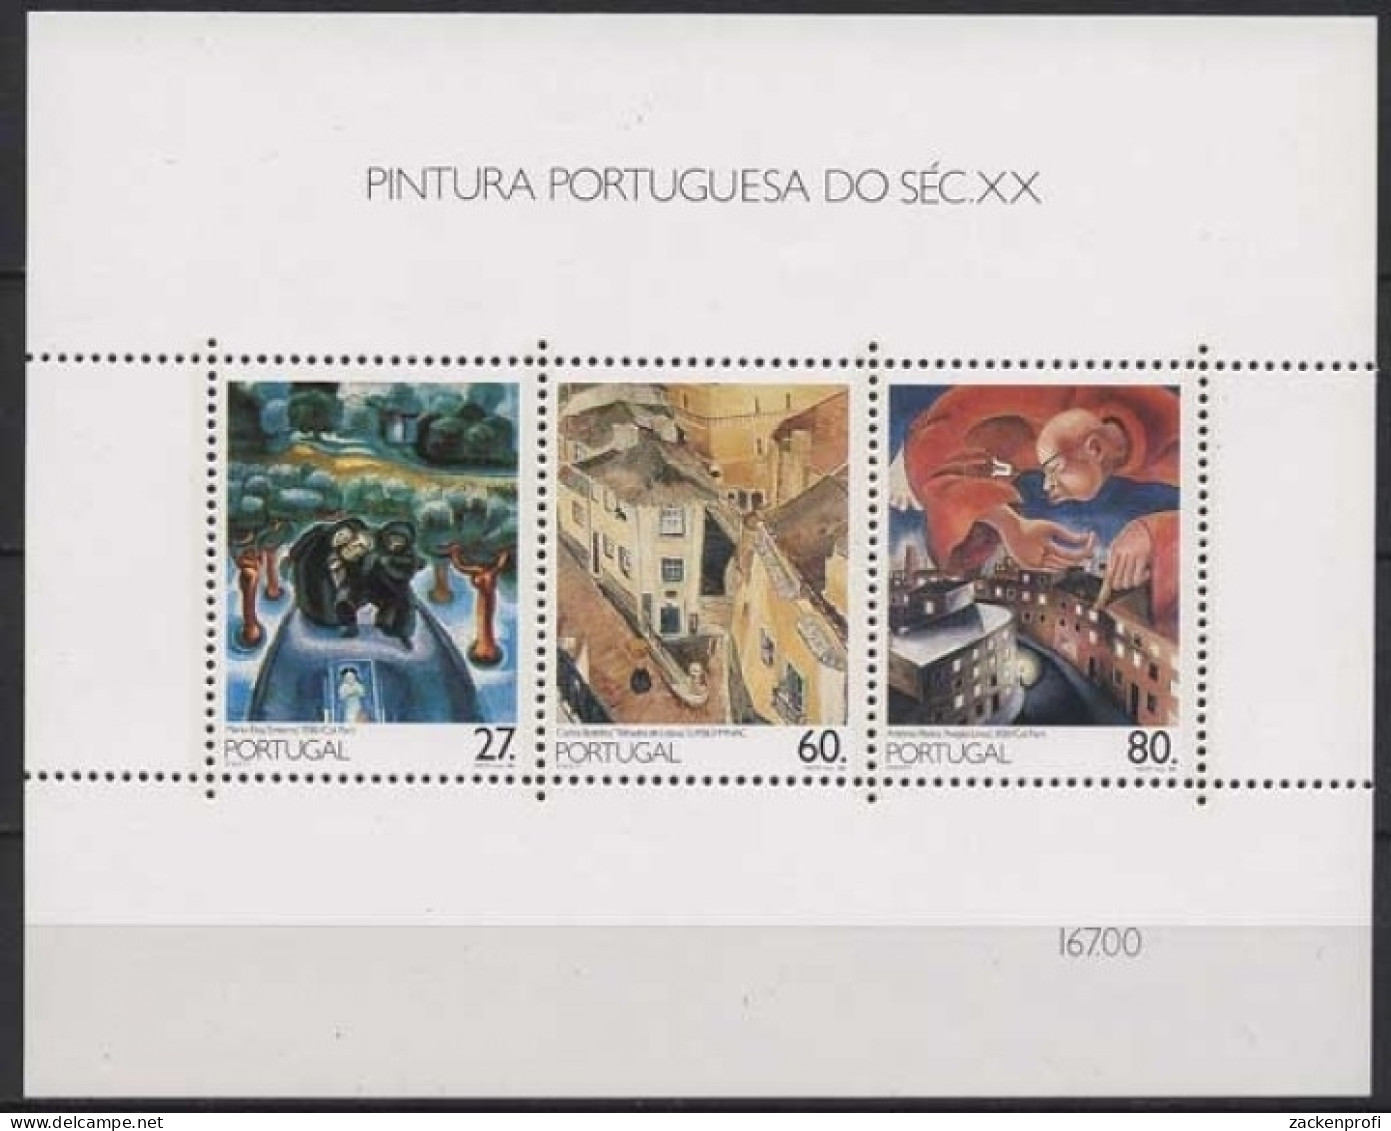 Portugal 1988 Gemälde Im 20. Jh. Block 61 Postfrisch (C91094) - Blocs-feuillets